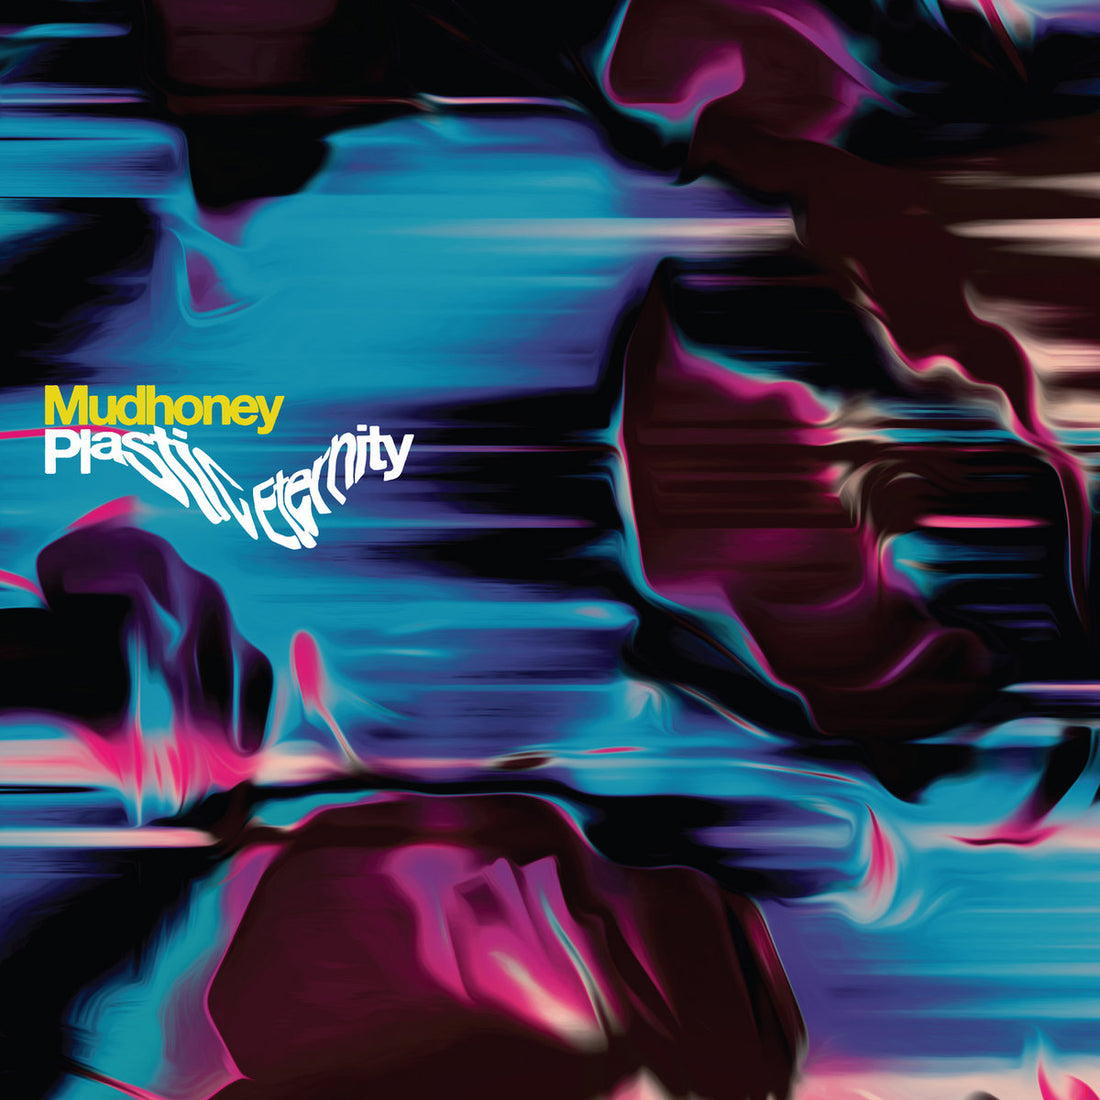 New Mudhoney LP in April!!